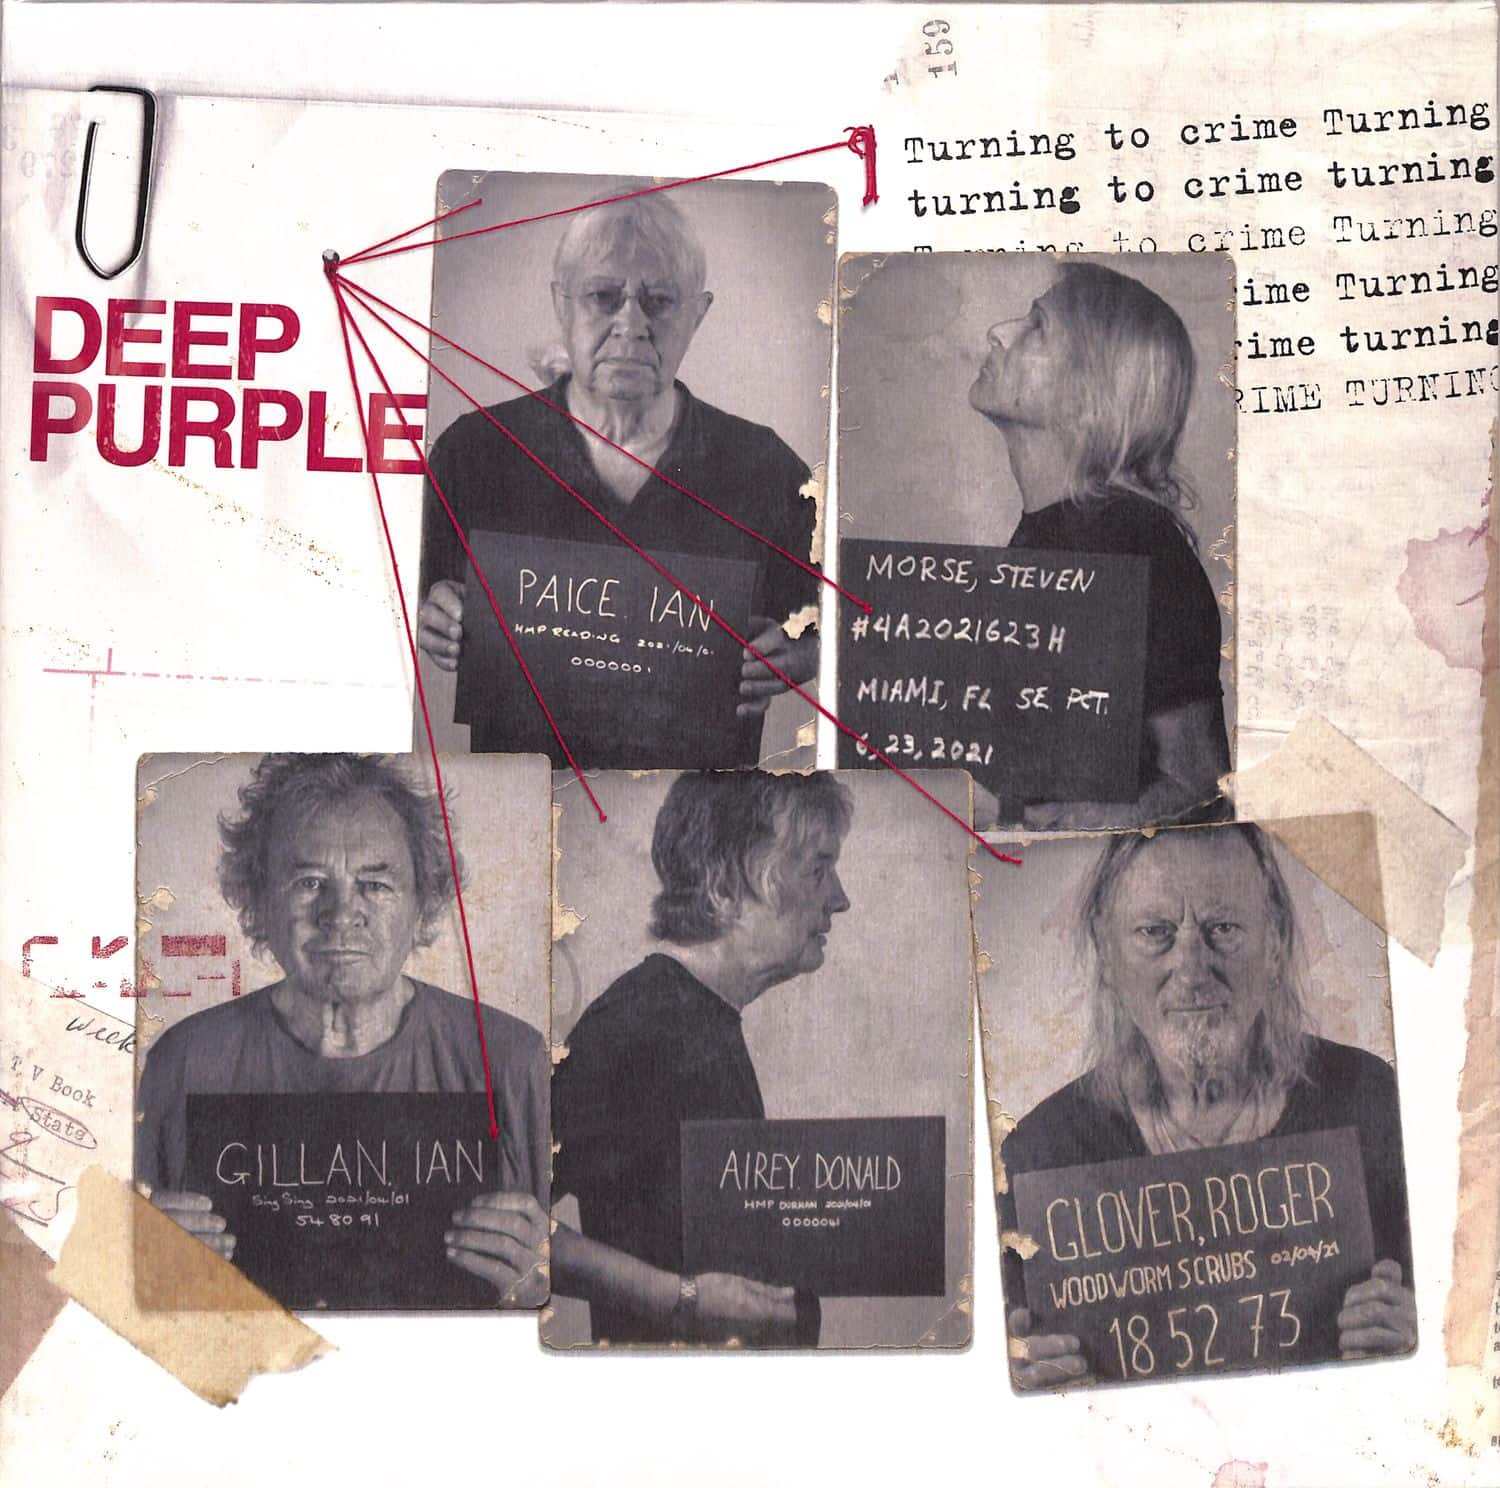 Deep Purple - TURNING TO CRIME 